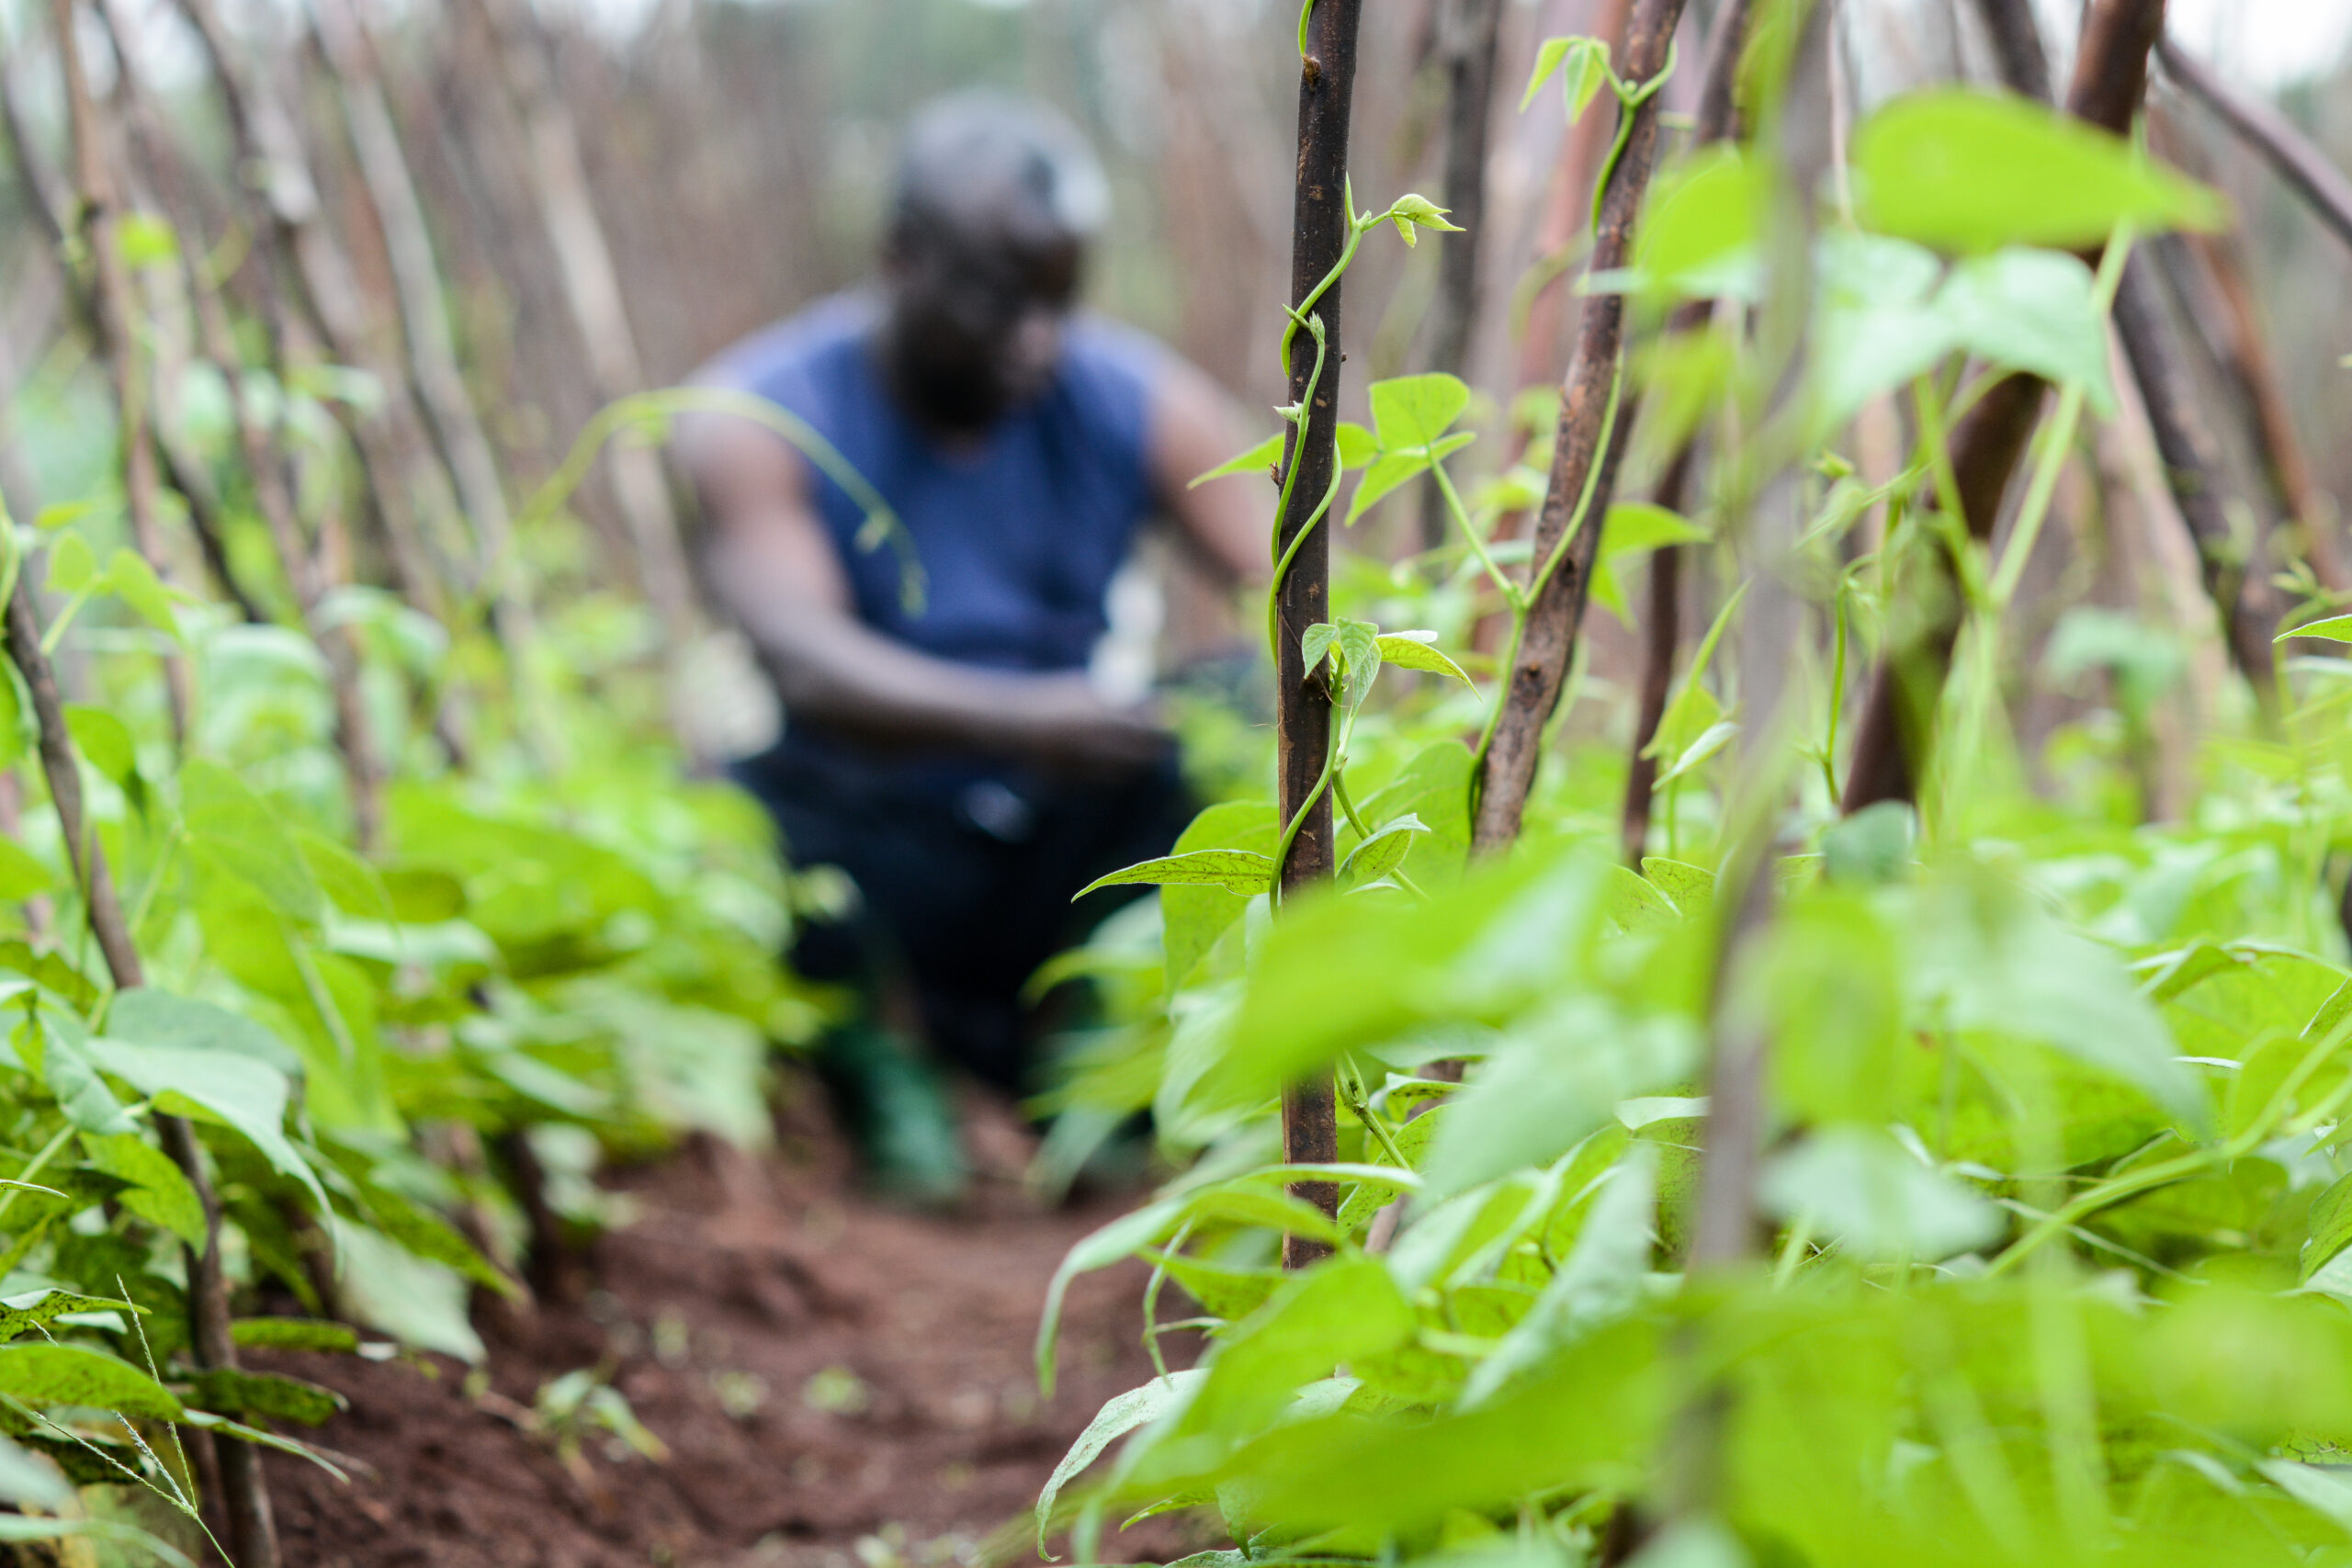 beans in burundi fighting malnutrition - GrowExpress Ltd.